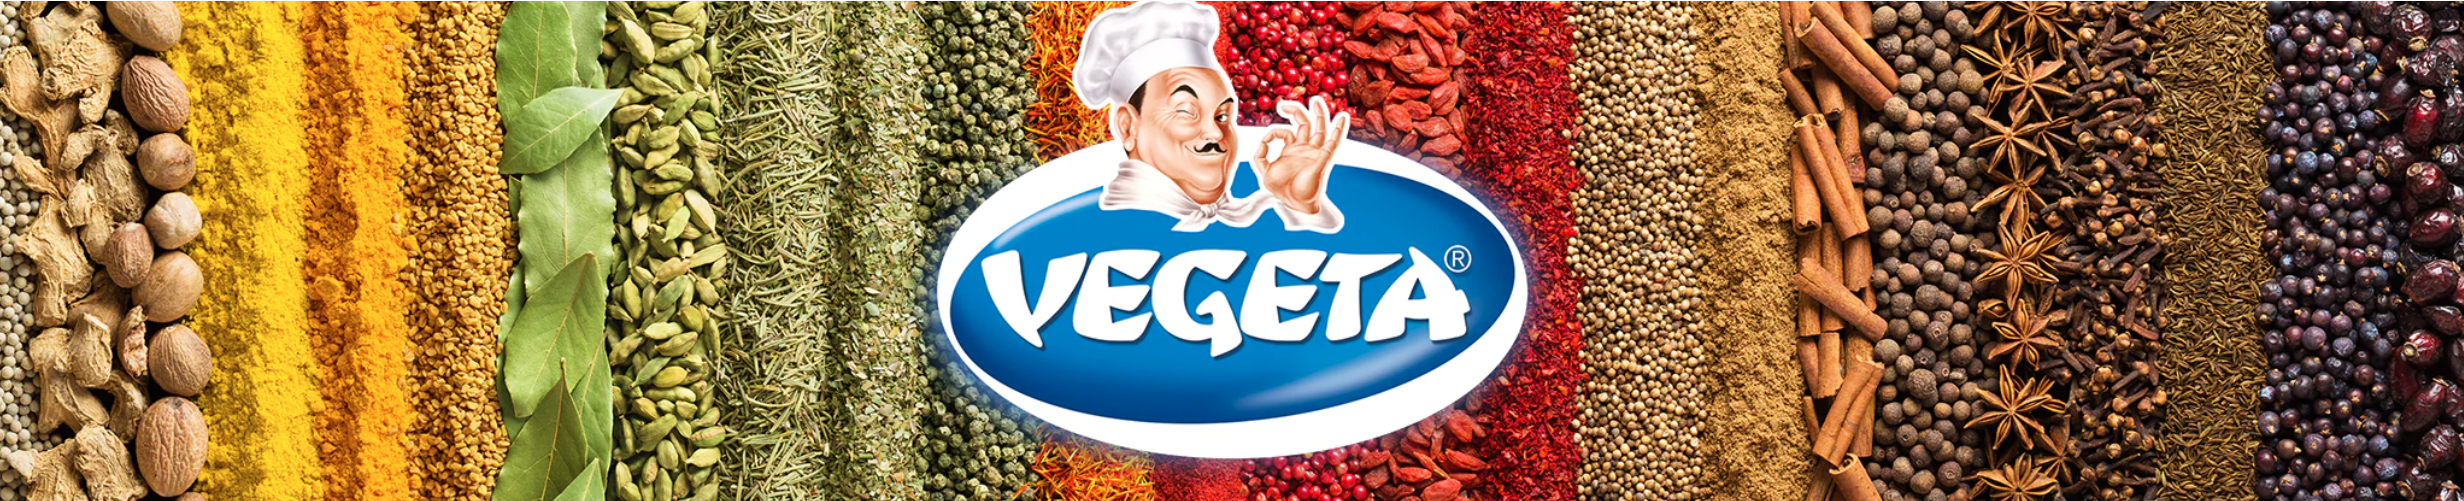 Vegeta Seasoning - Global Imports & Exports Wholesale European Food Distributors